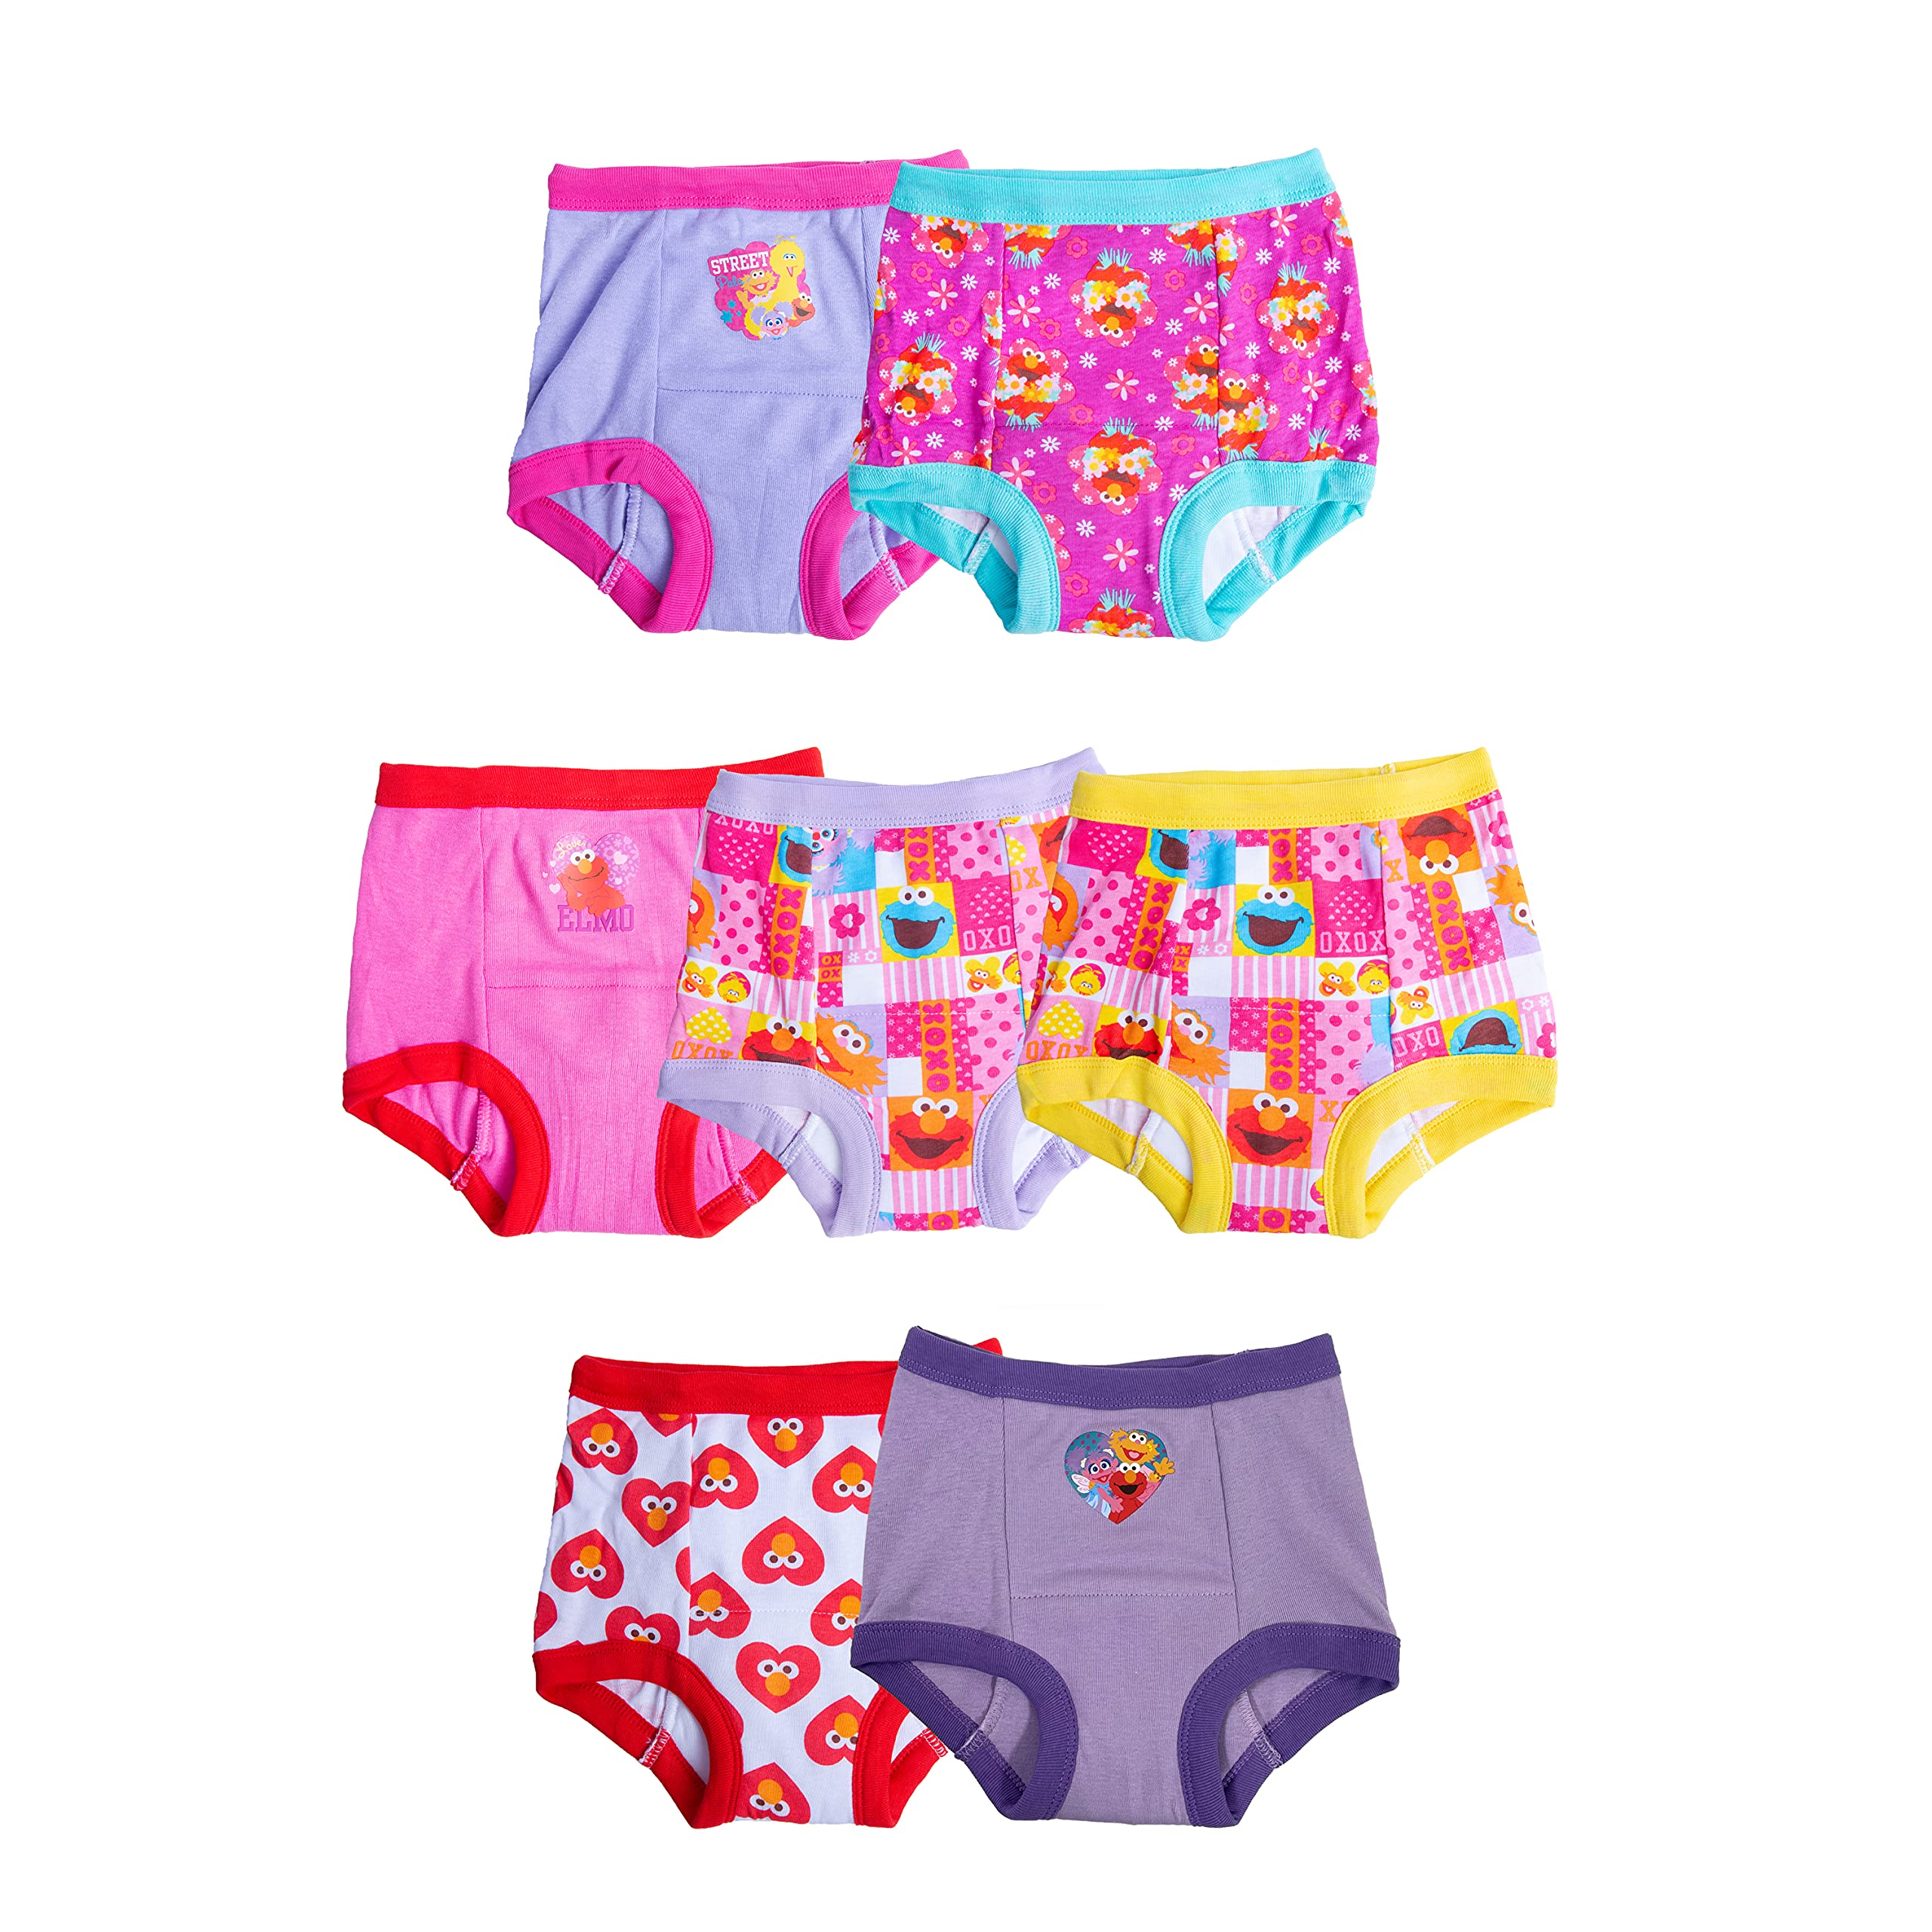 Sesame Street Training Pants Toddler Girls Underwear 4T